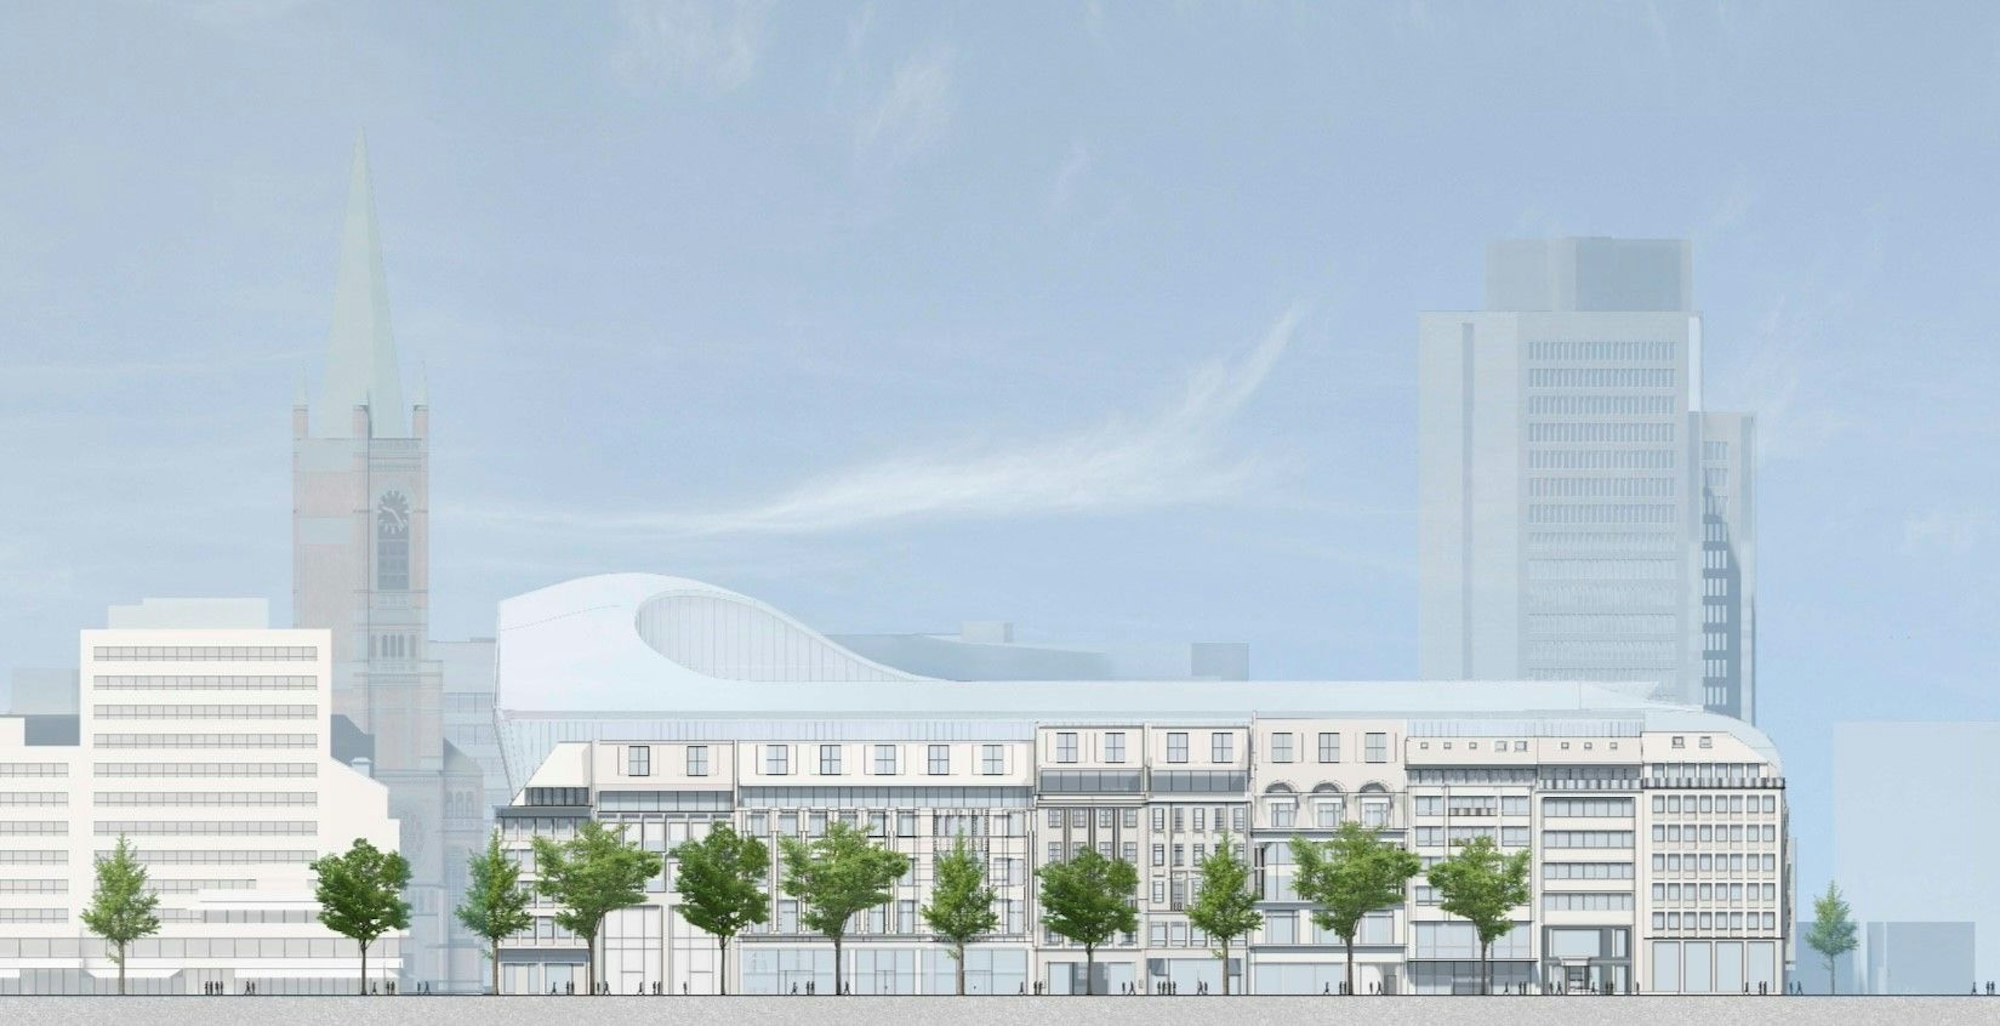 Entwurf des Calatrava-Hauses an der Kö